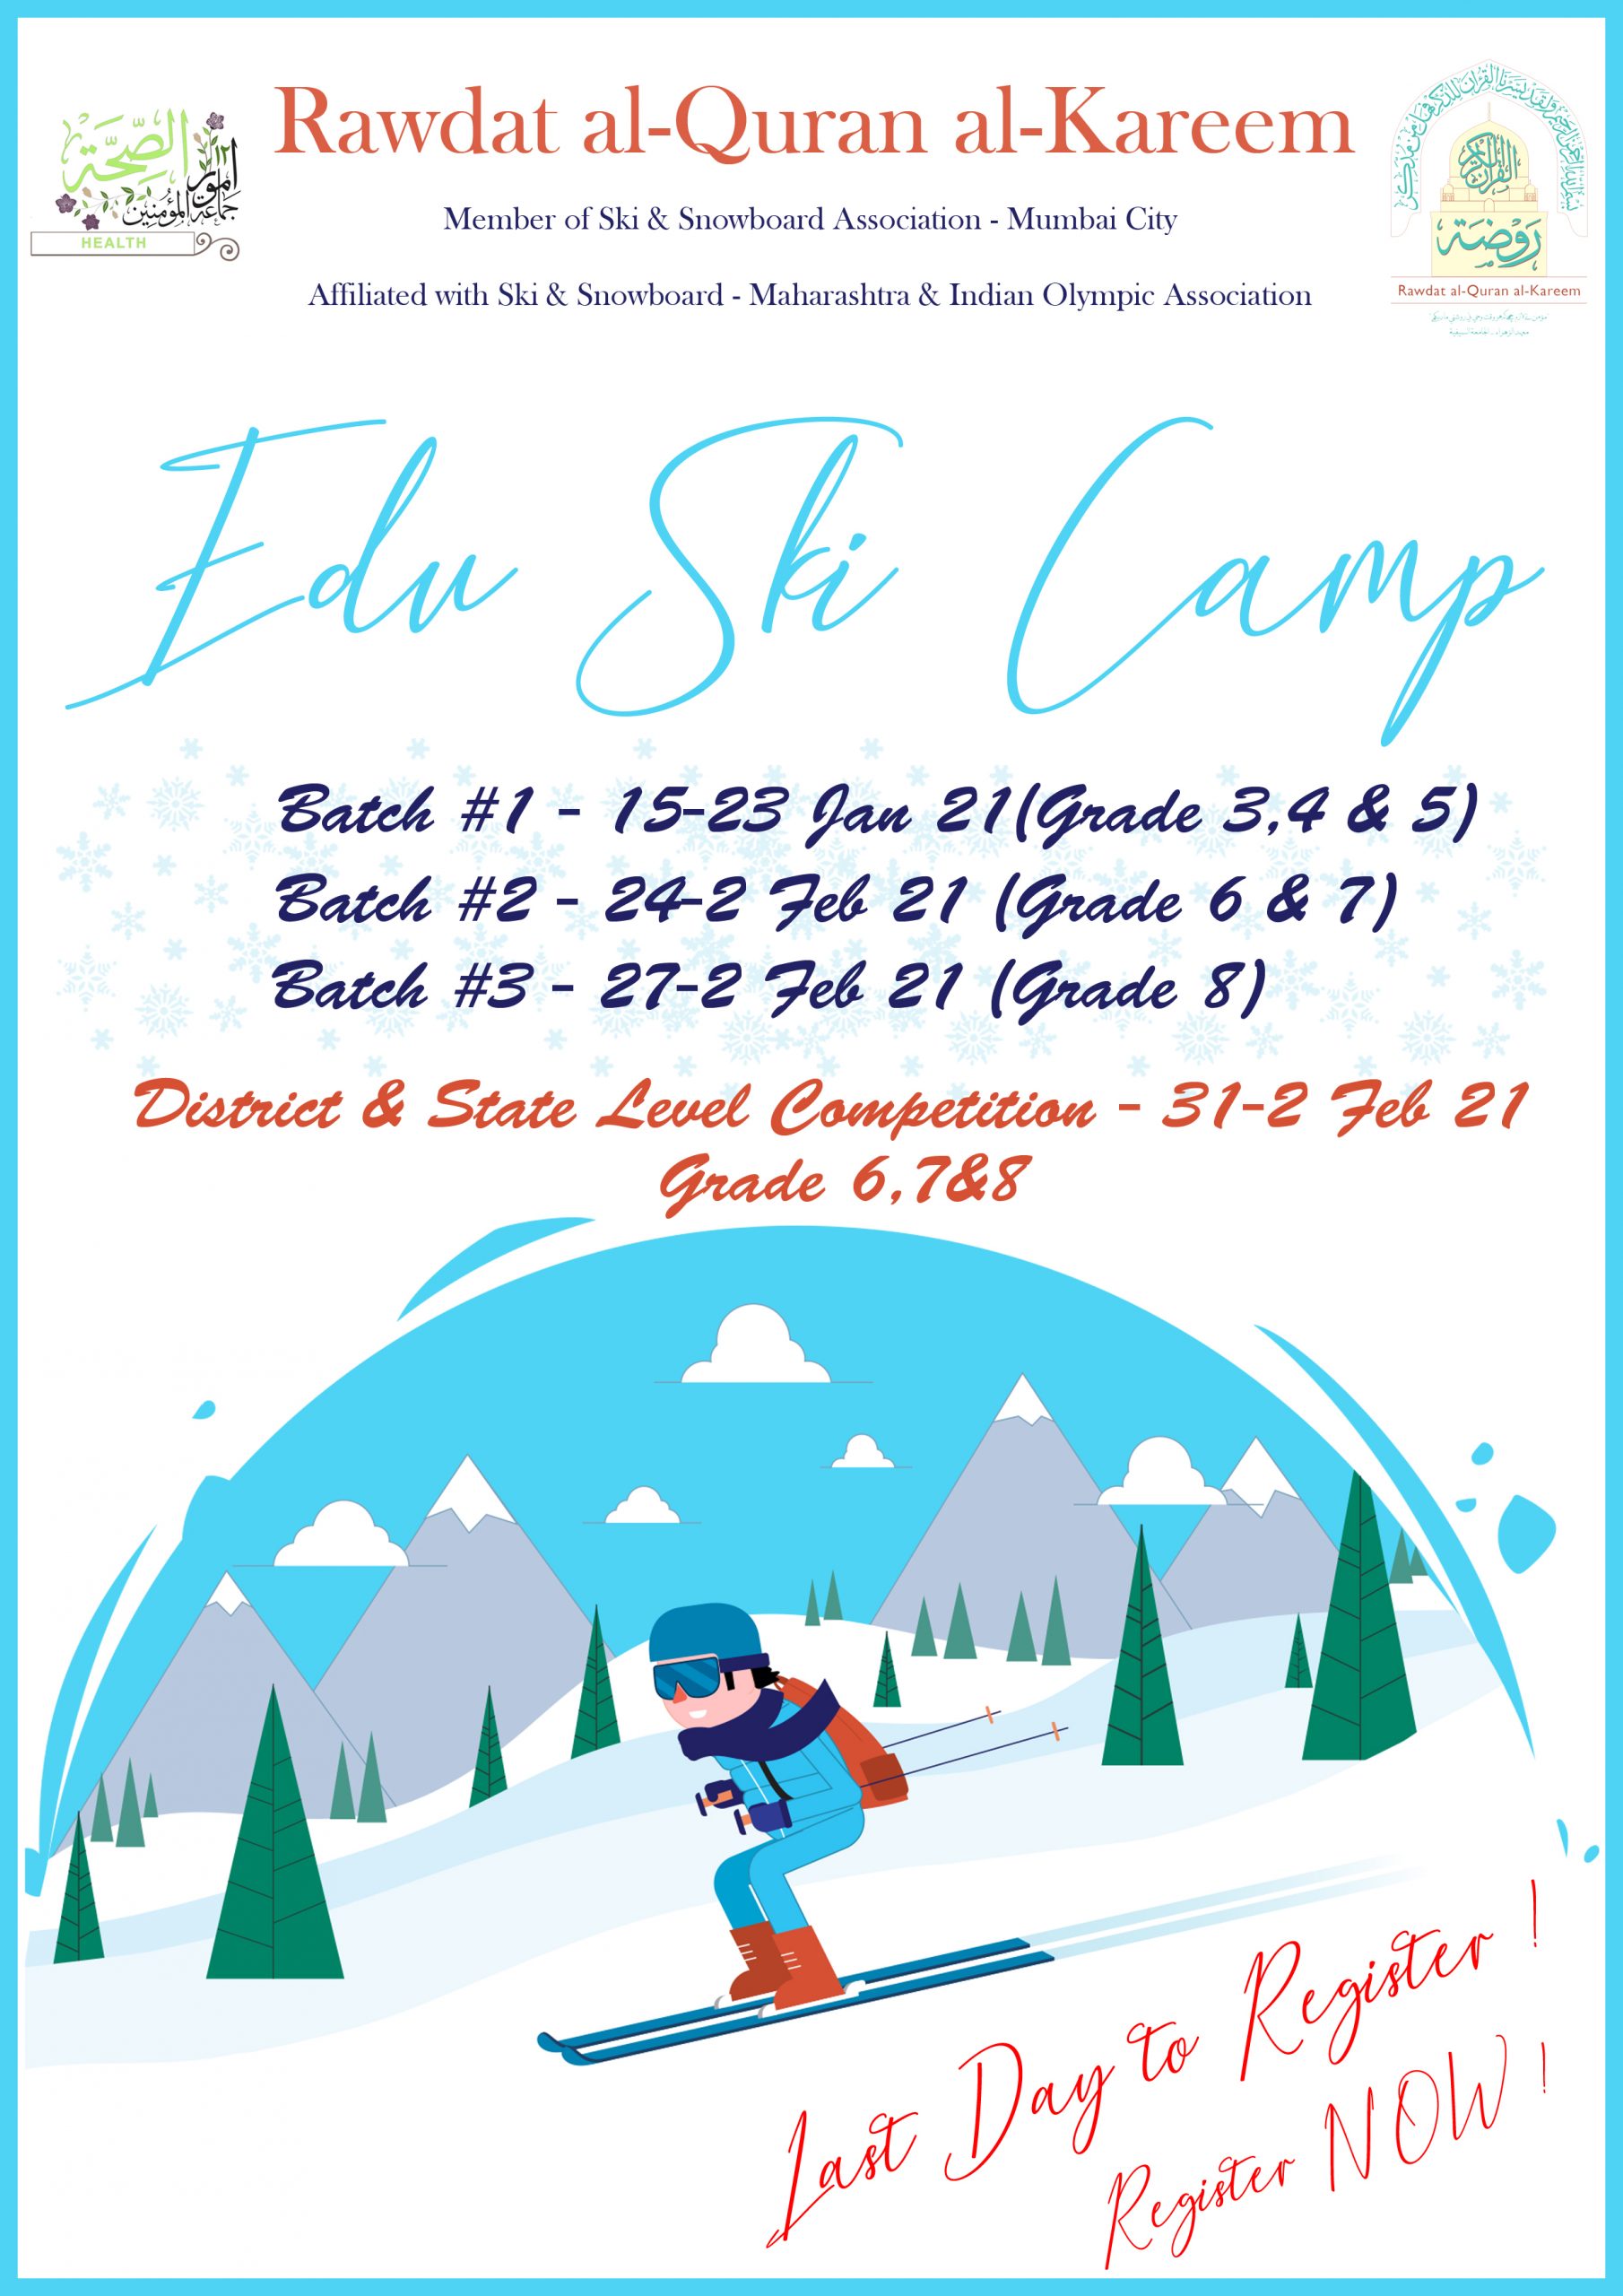 Edu Ski Camp - Last Day to register